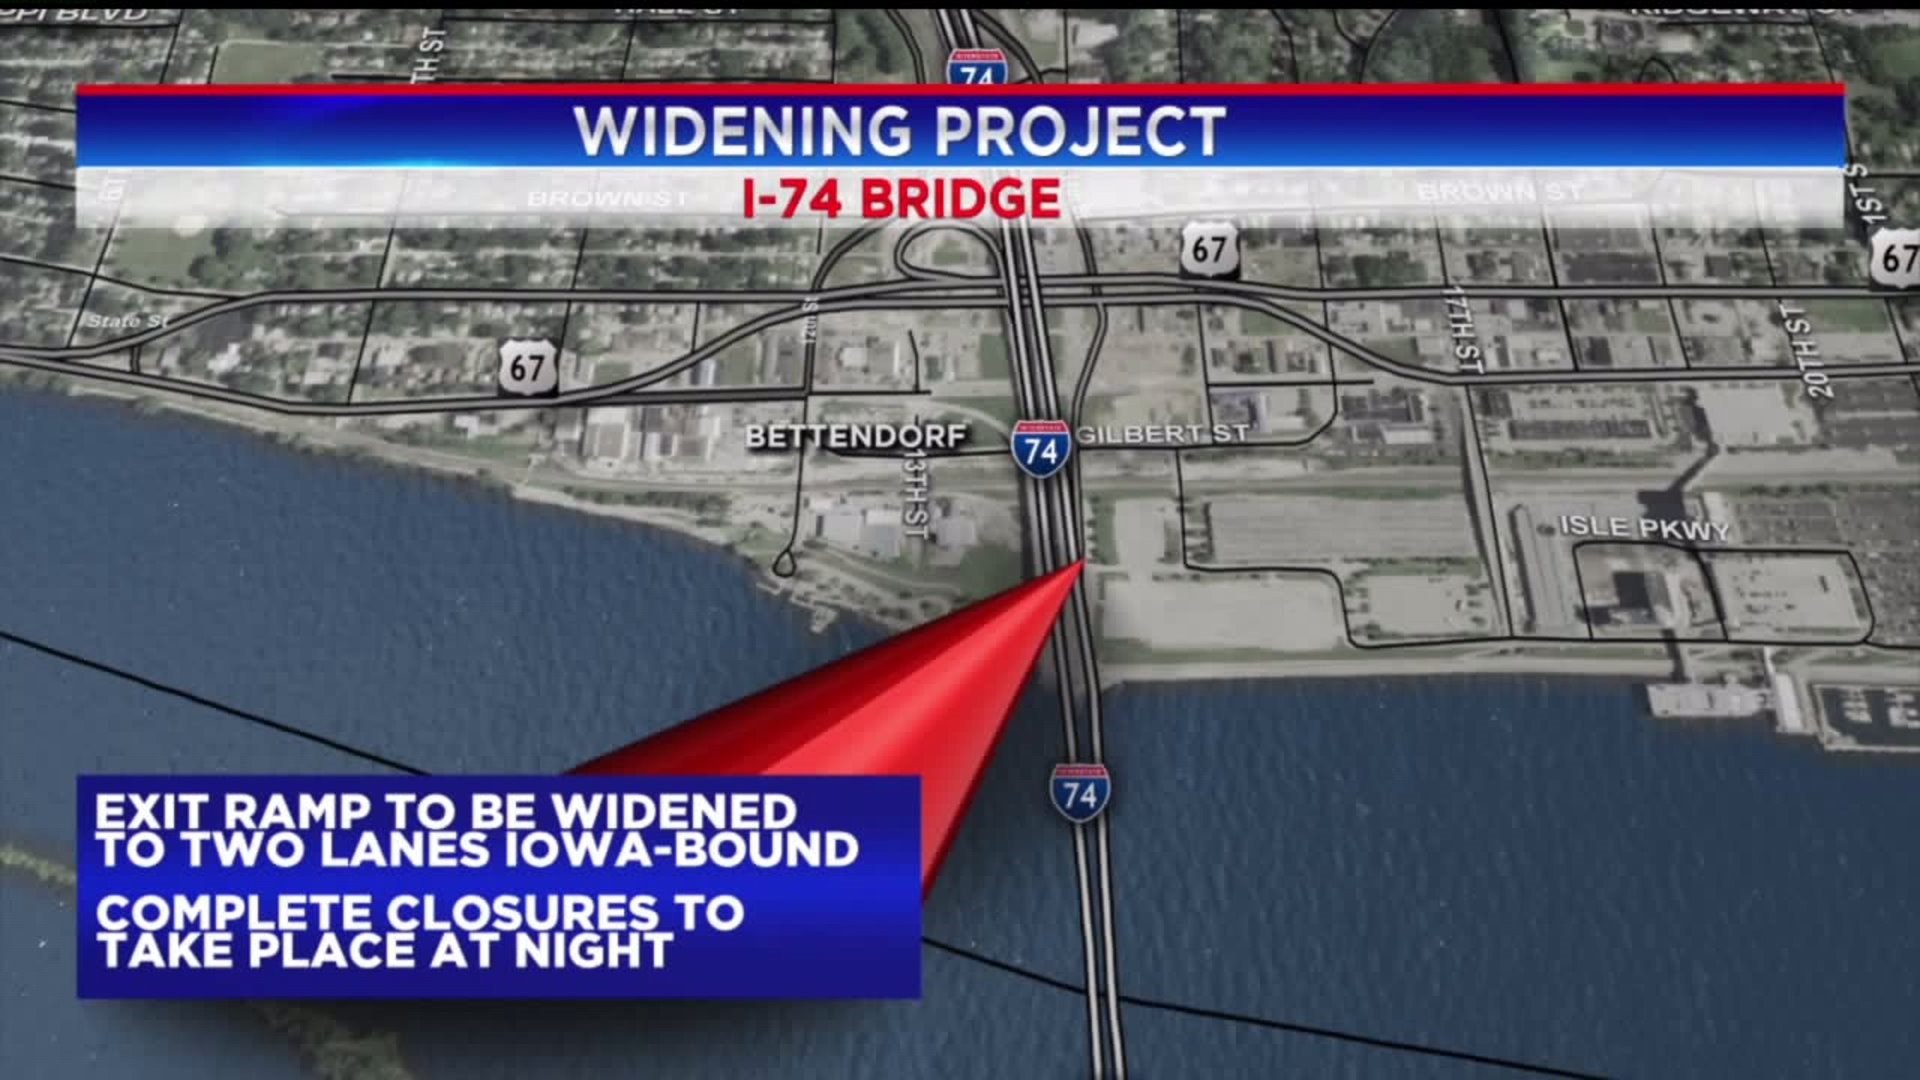 Widening project will close I-74 Bridge intermittently